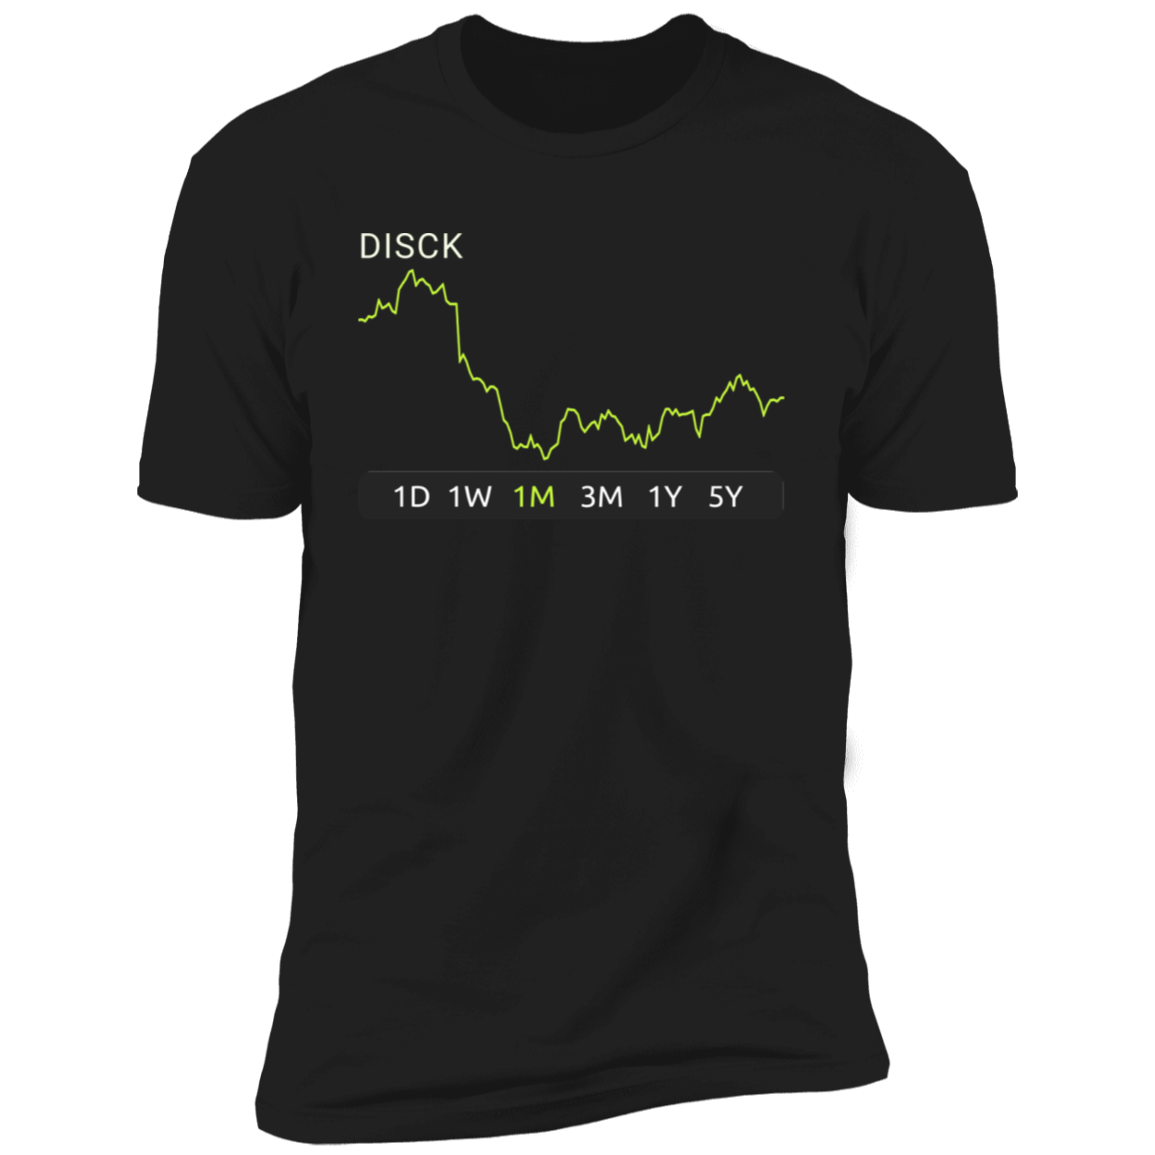 DISCK Stock 1m Premium T-Shirt